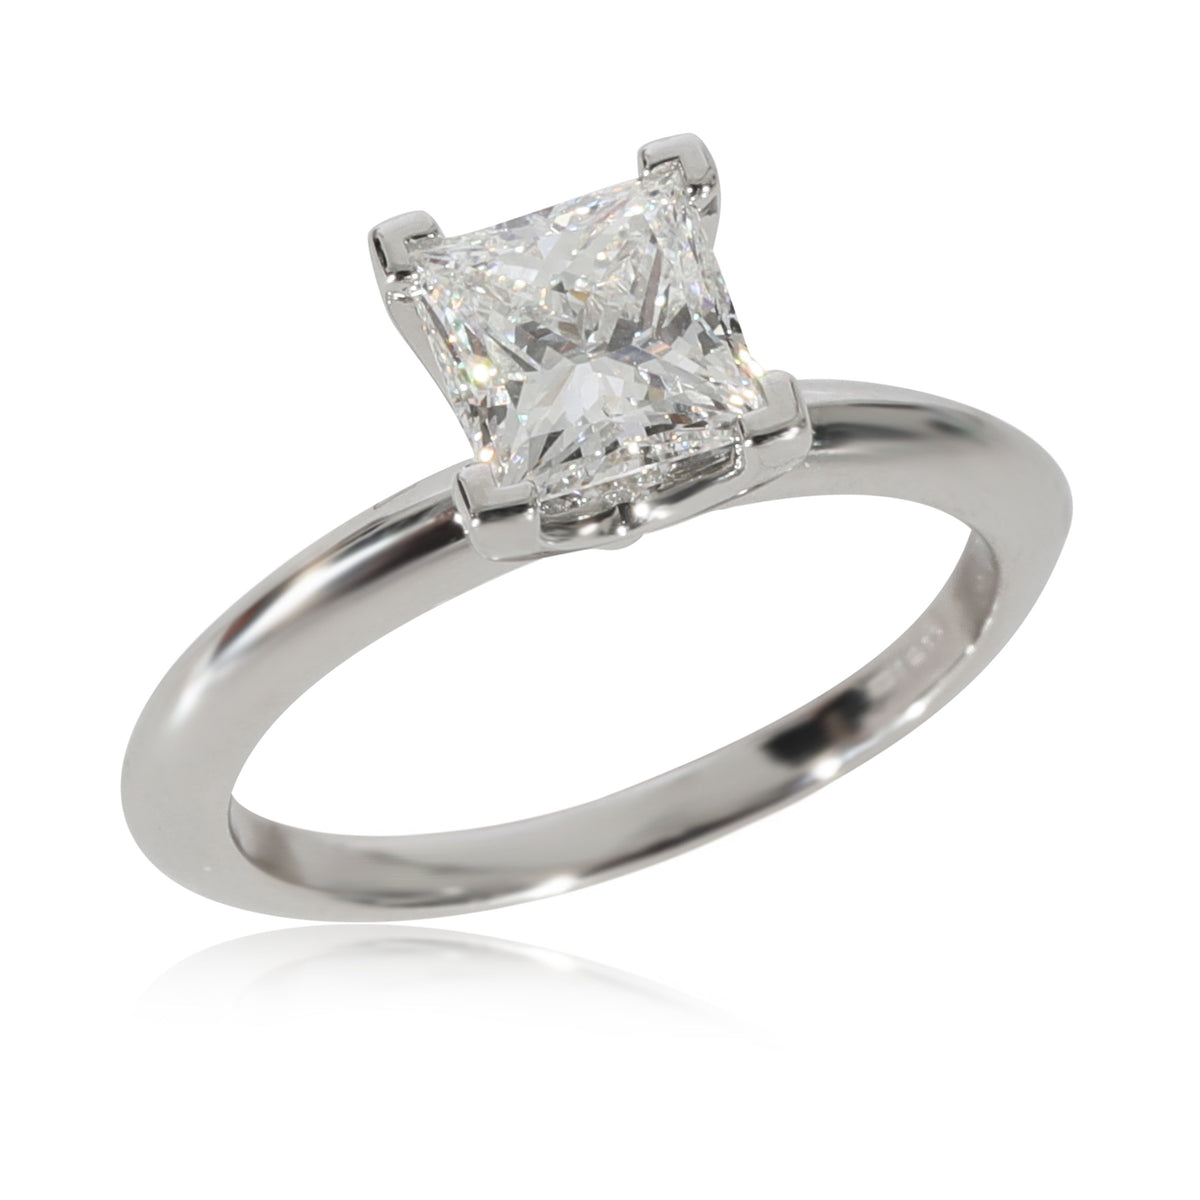 Tiffany & Co. Princess Cut Diamond Engagement Ring in   F VS1 1.03 CTW